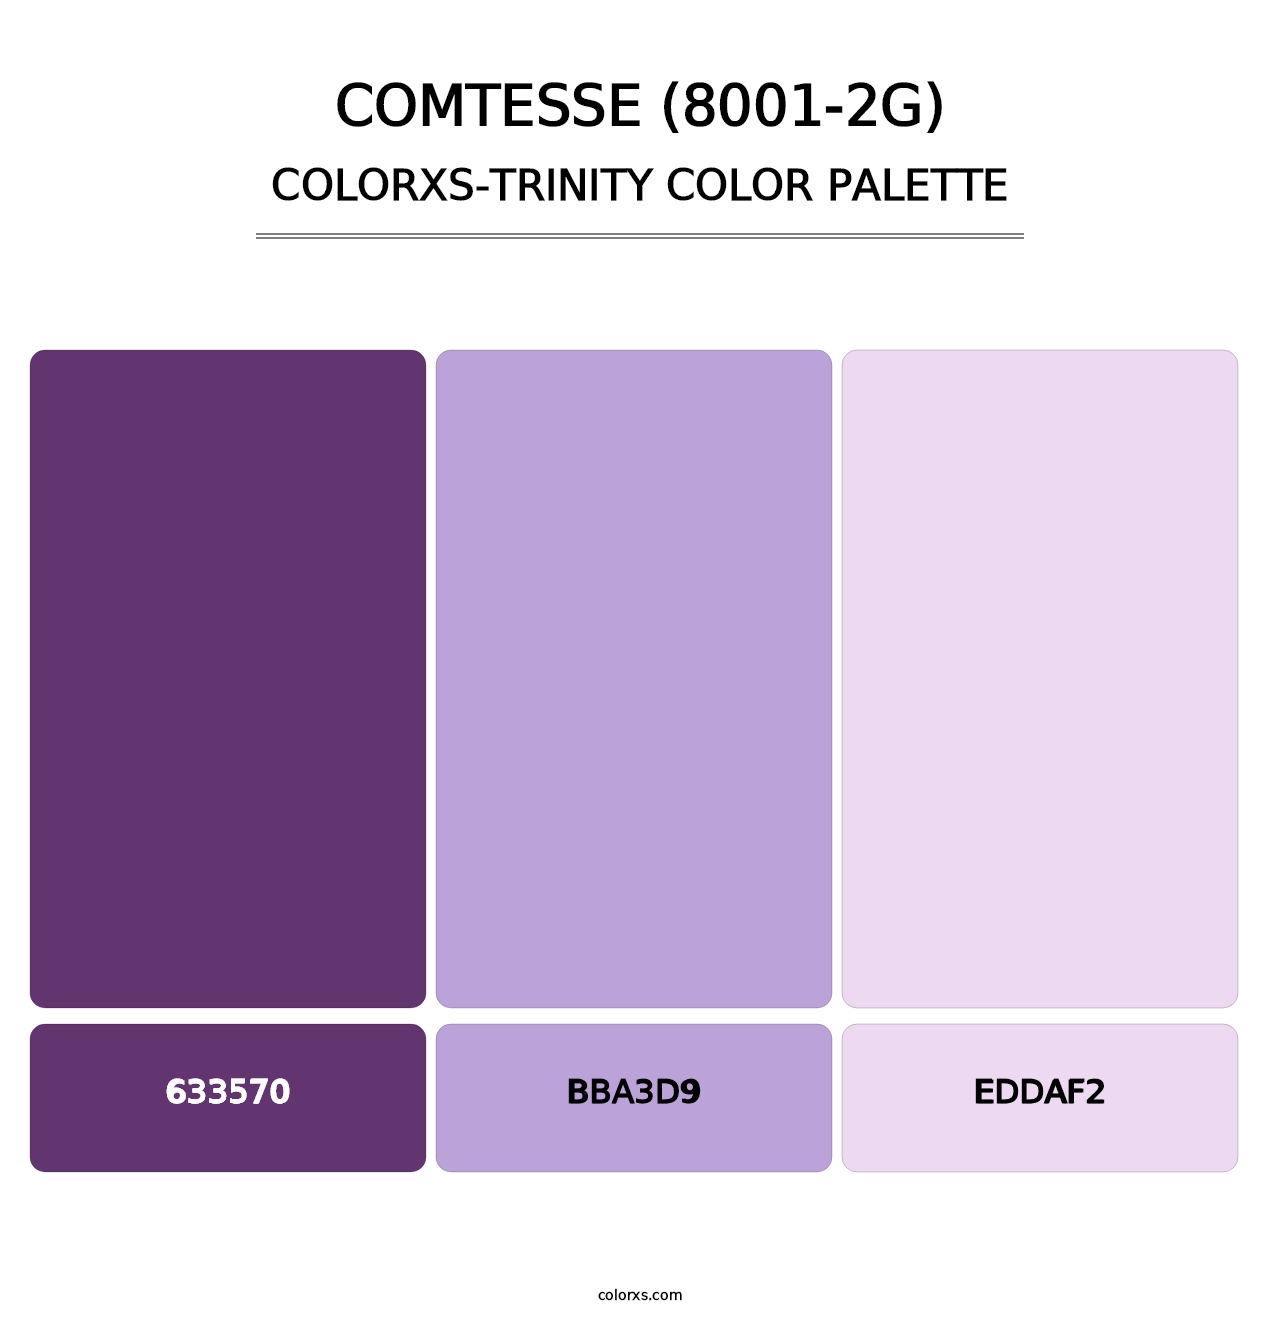 Comtesse (8001-2G) - Colorxs Trinity Palette